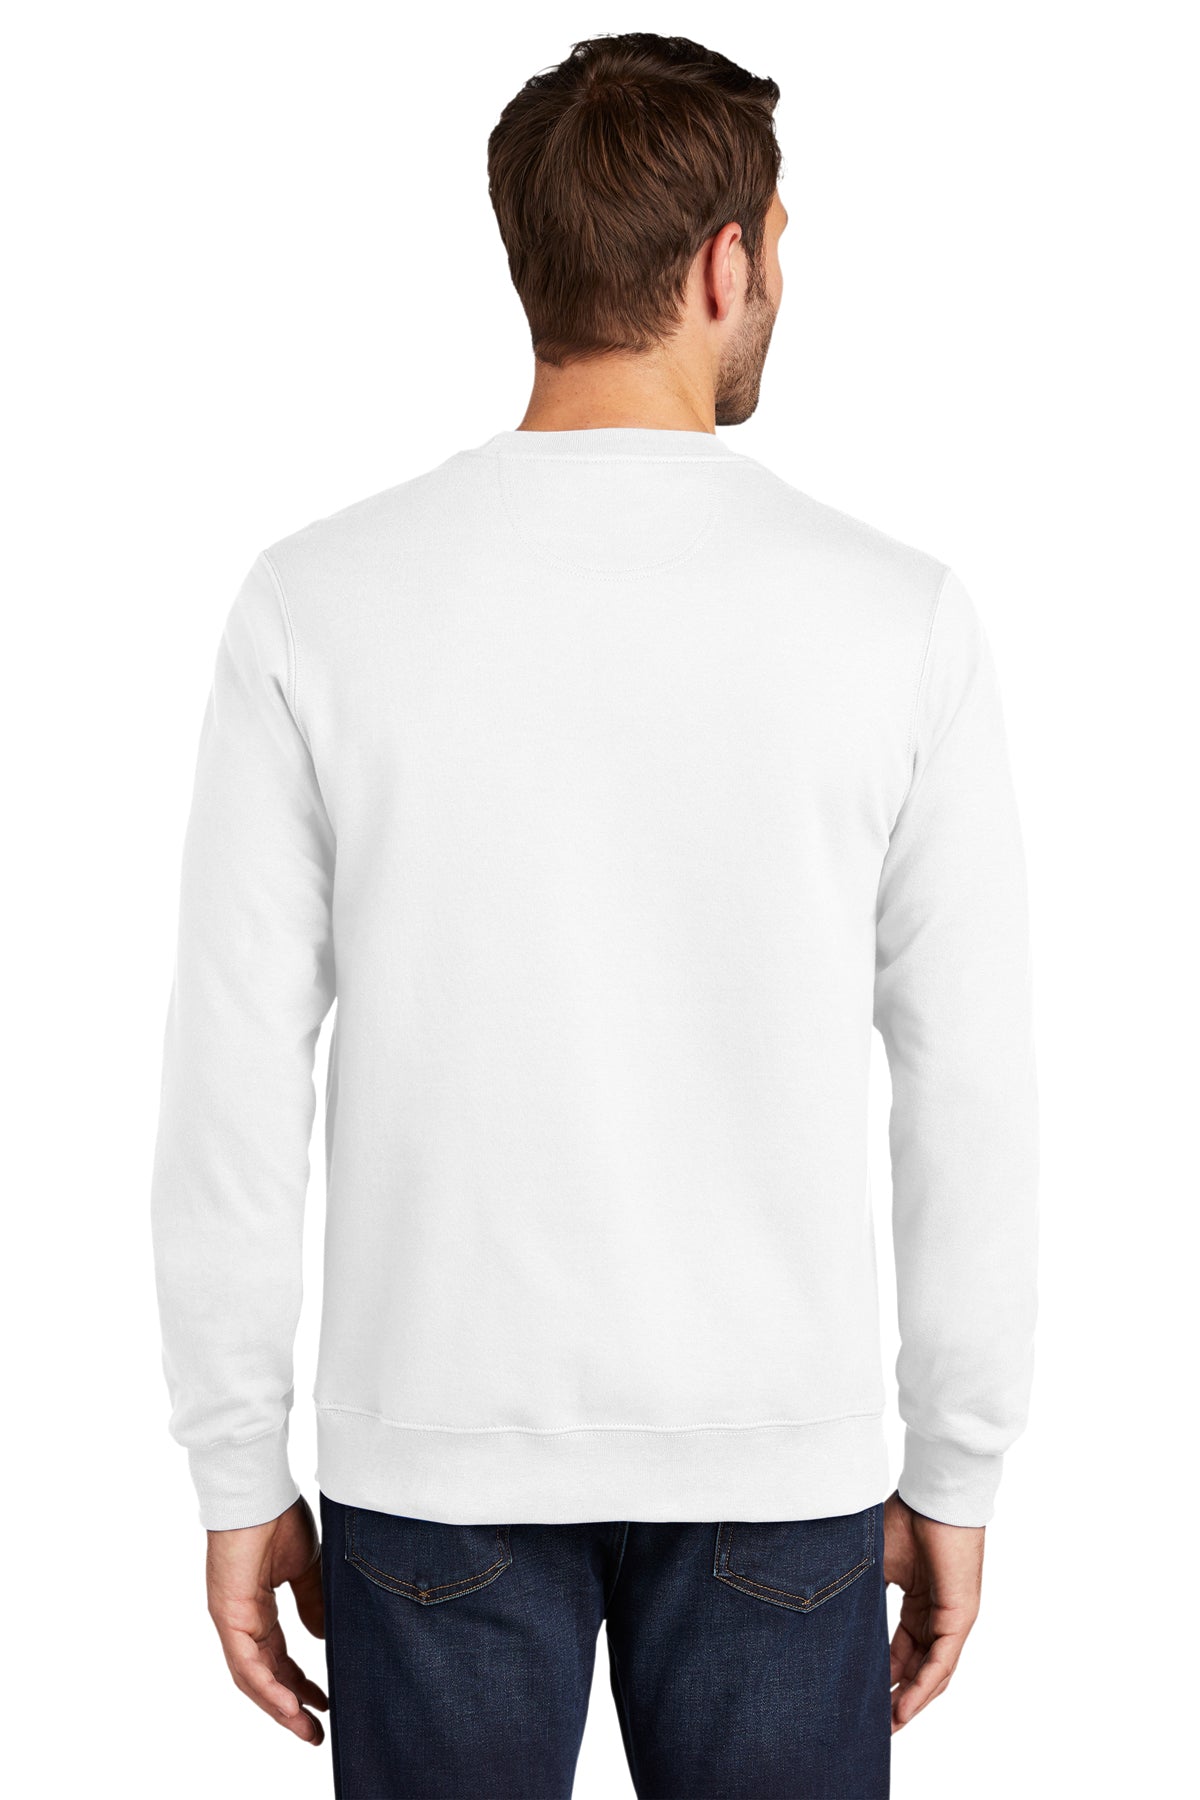 port & company_pc850 _white_company_logo_sweatshirts